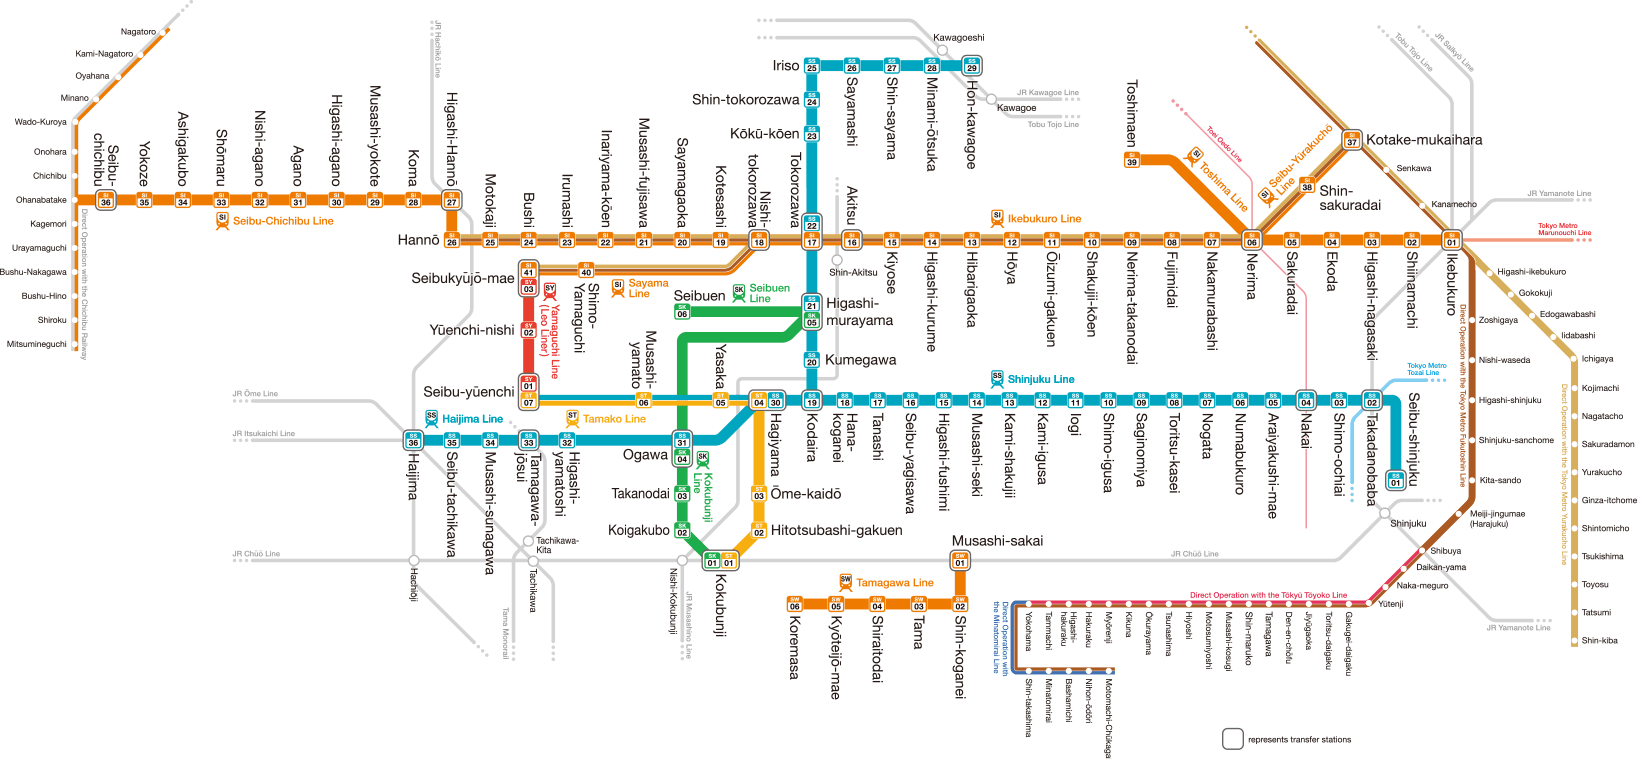 RAILWAY MAP